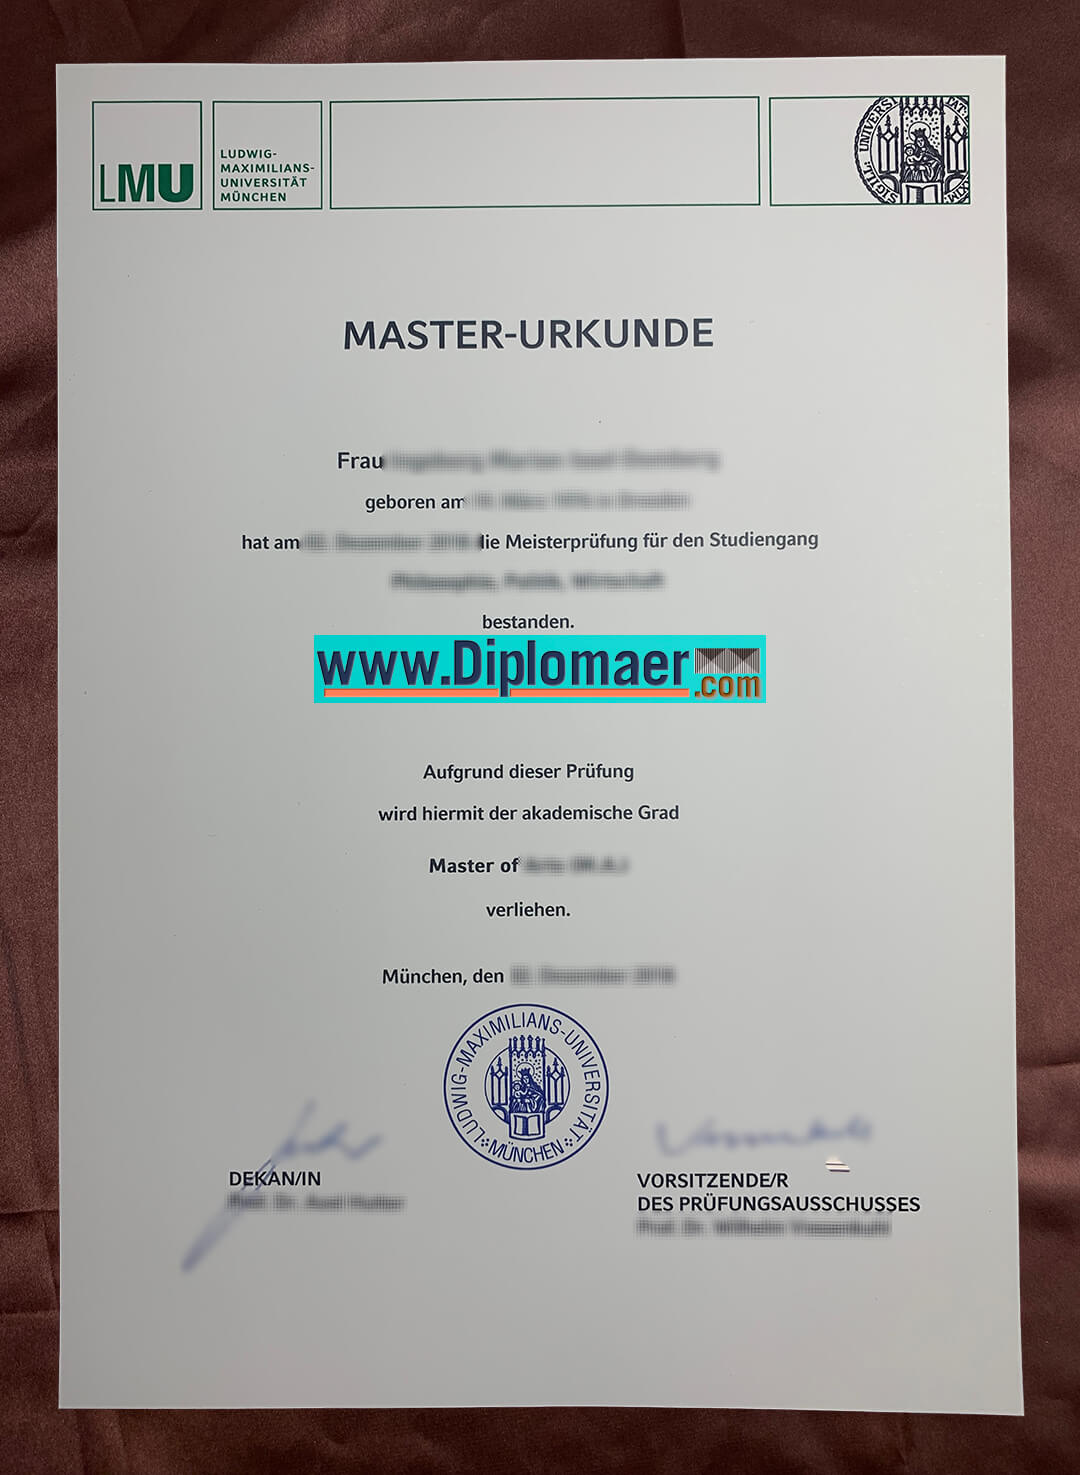 Universitat Munchen Fake Diploma - Where to get Ludwig-Maximilians-Munich University fake degree without examinations?